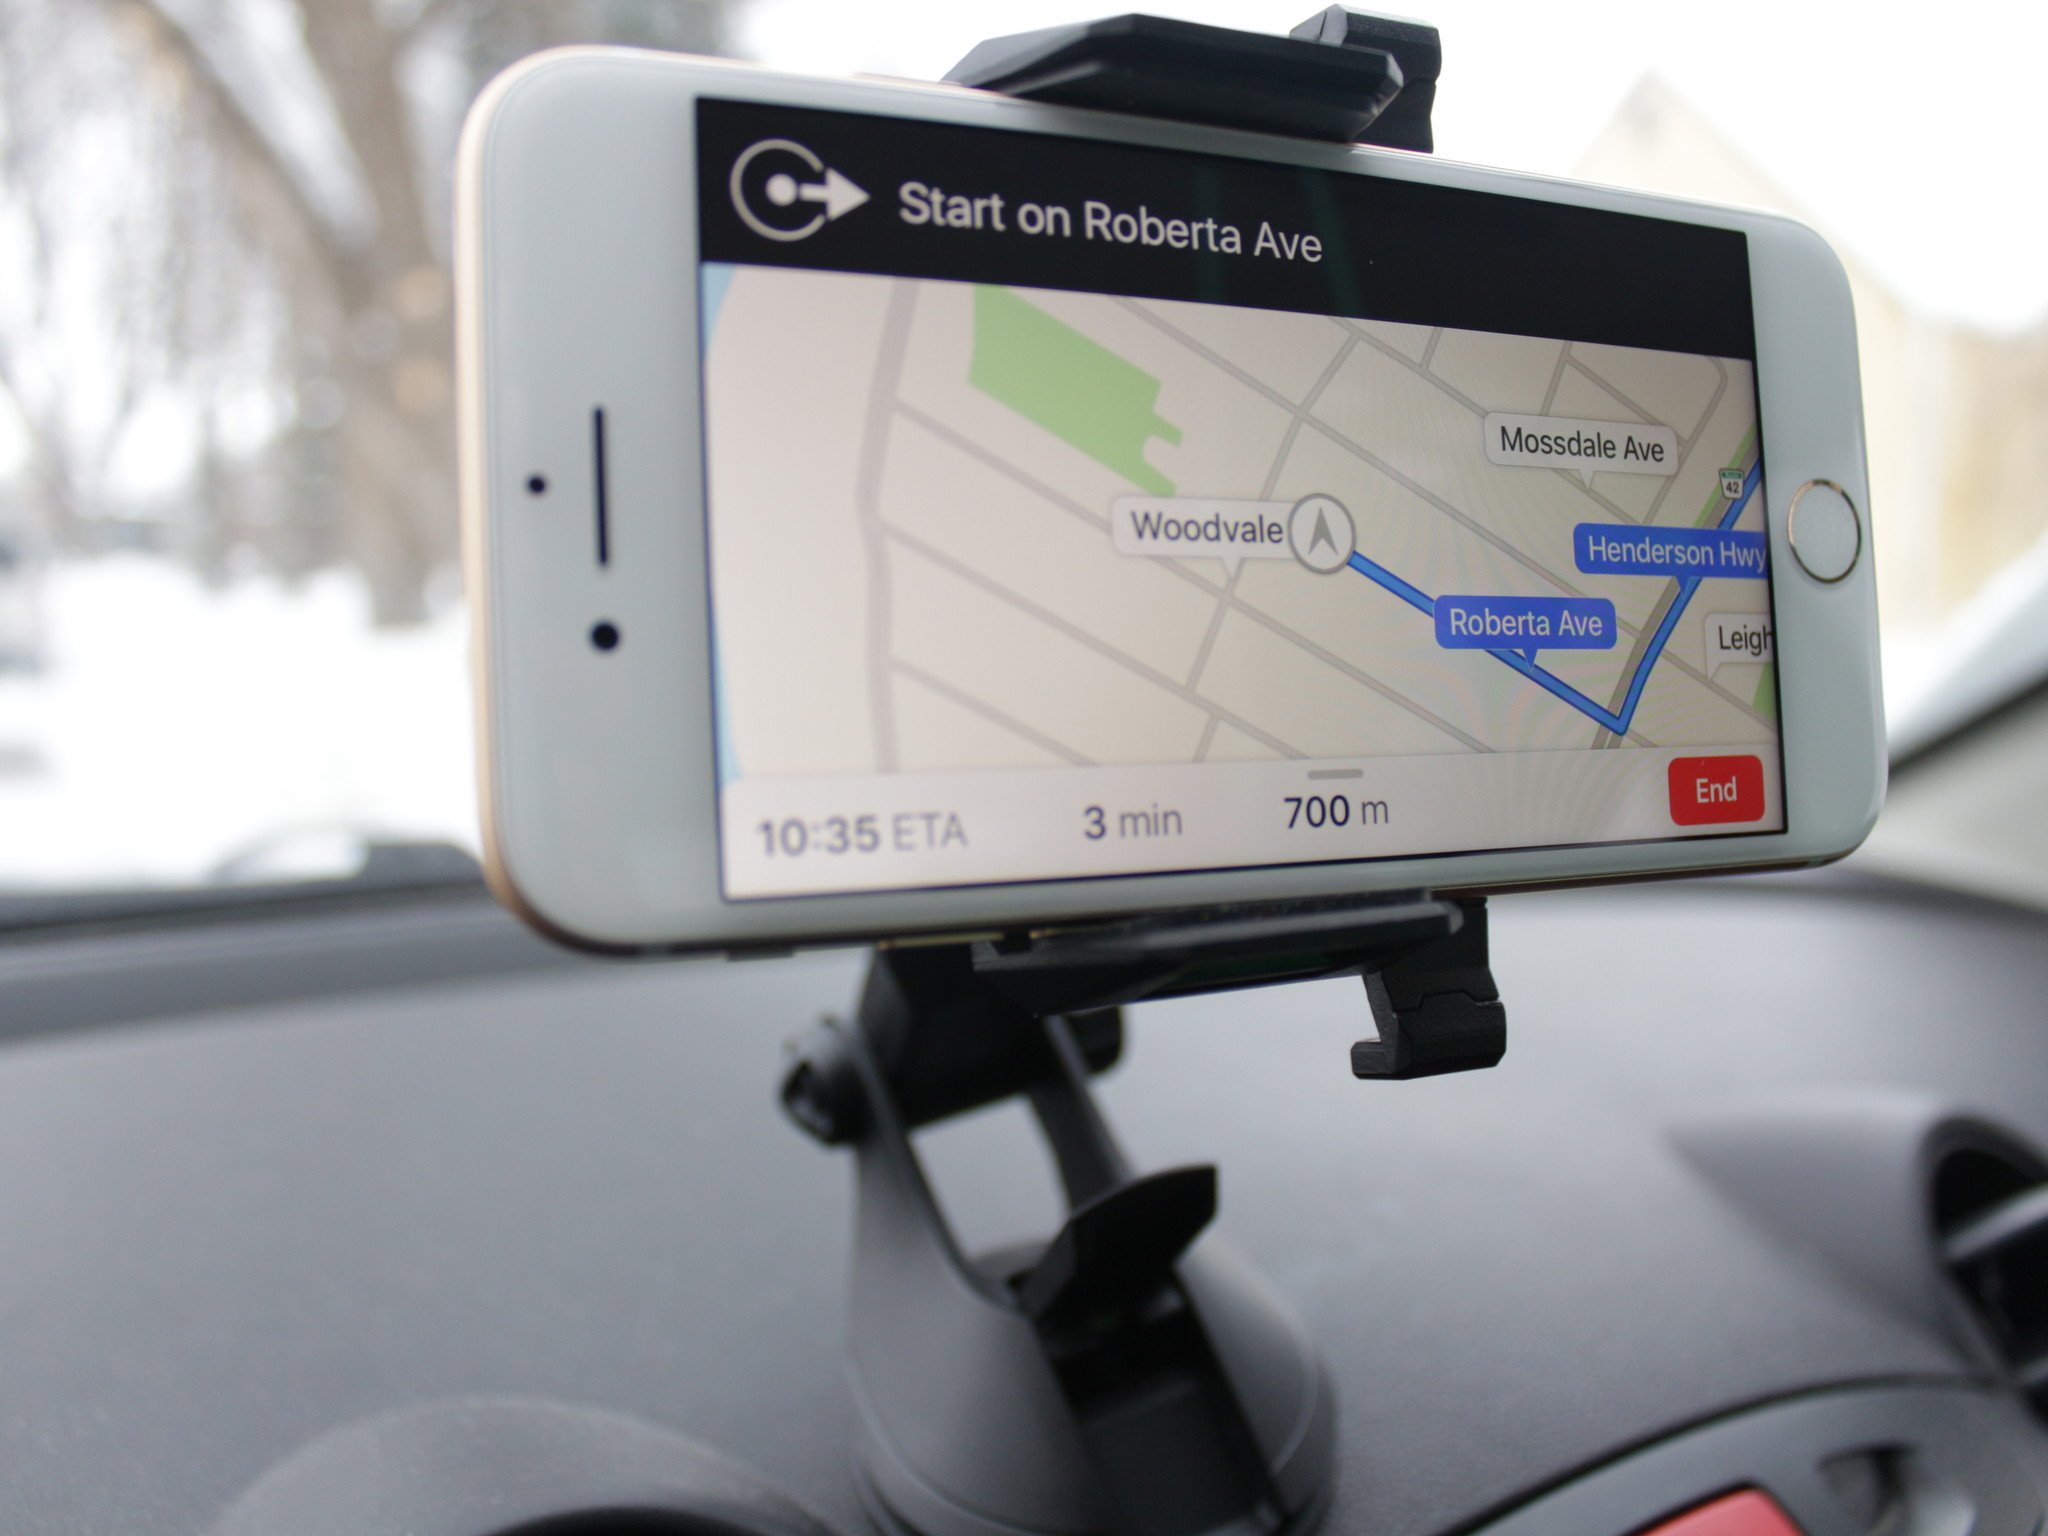 iPhone mounted in car